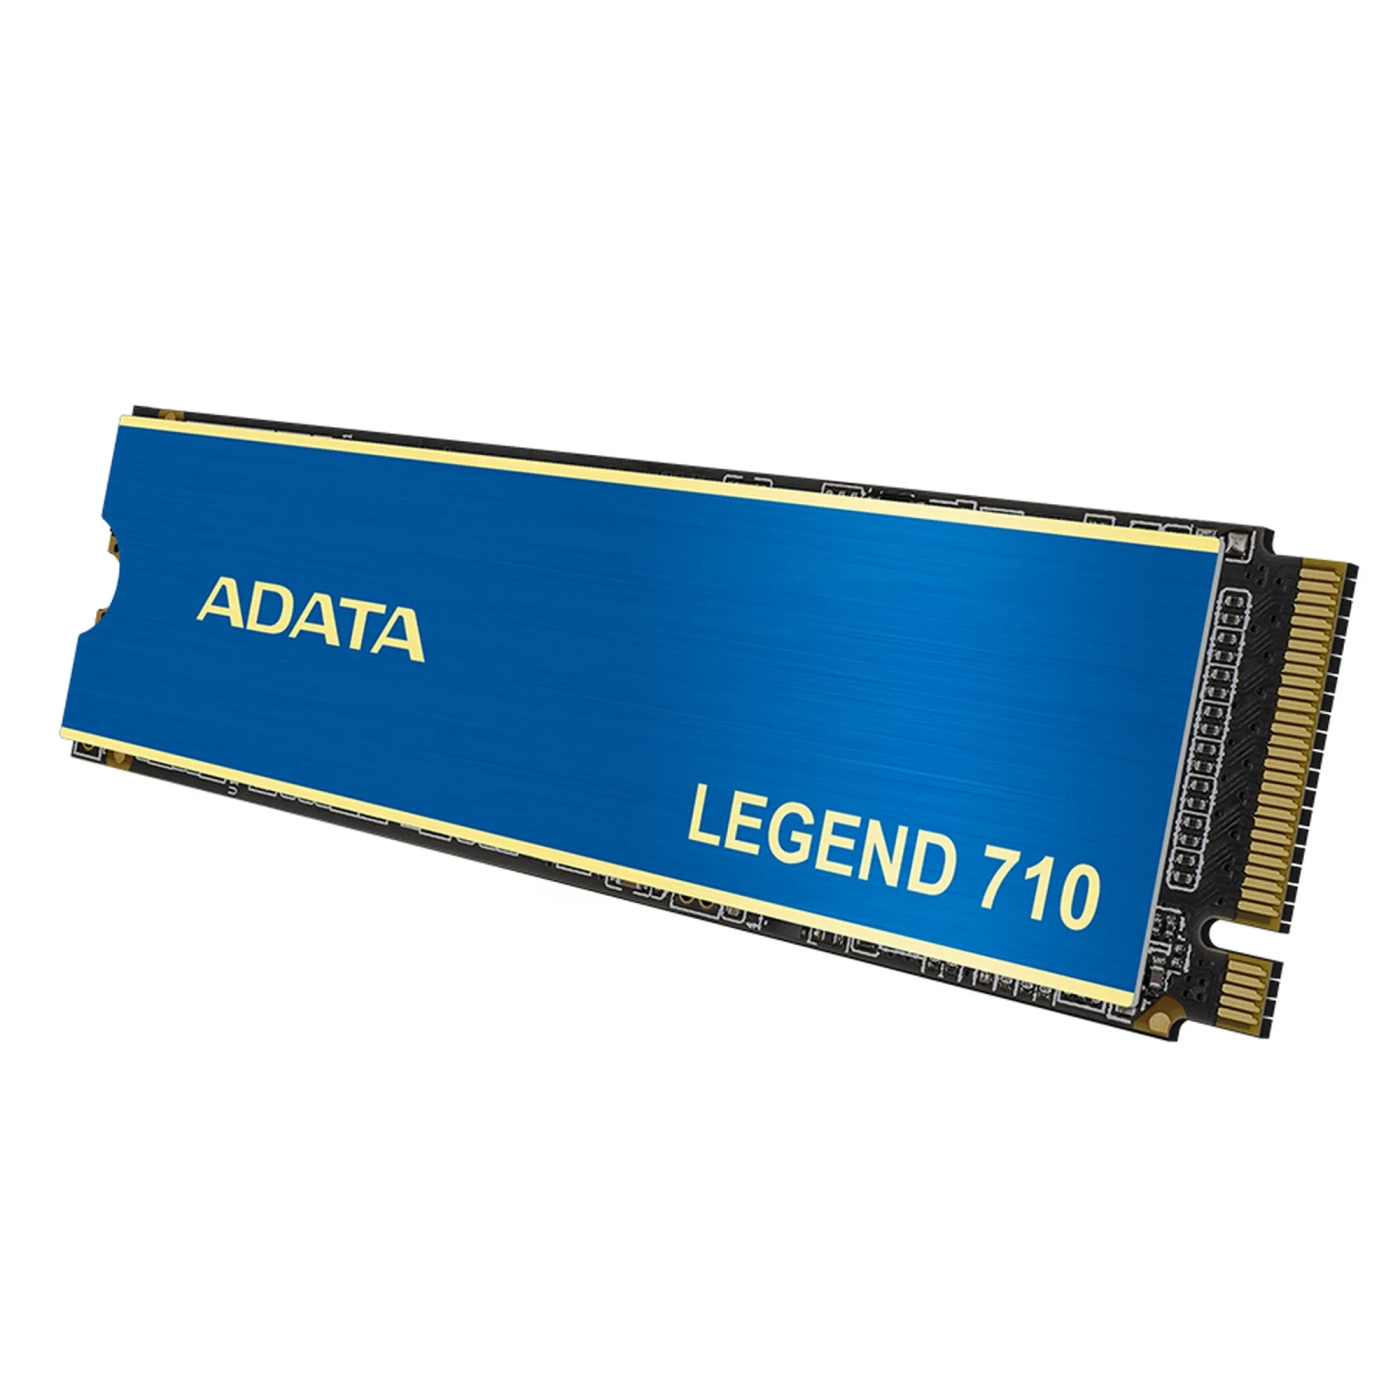 Купить SSD ADATA Legend 710 1TB M.2 NVMe - фото 3